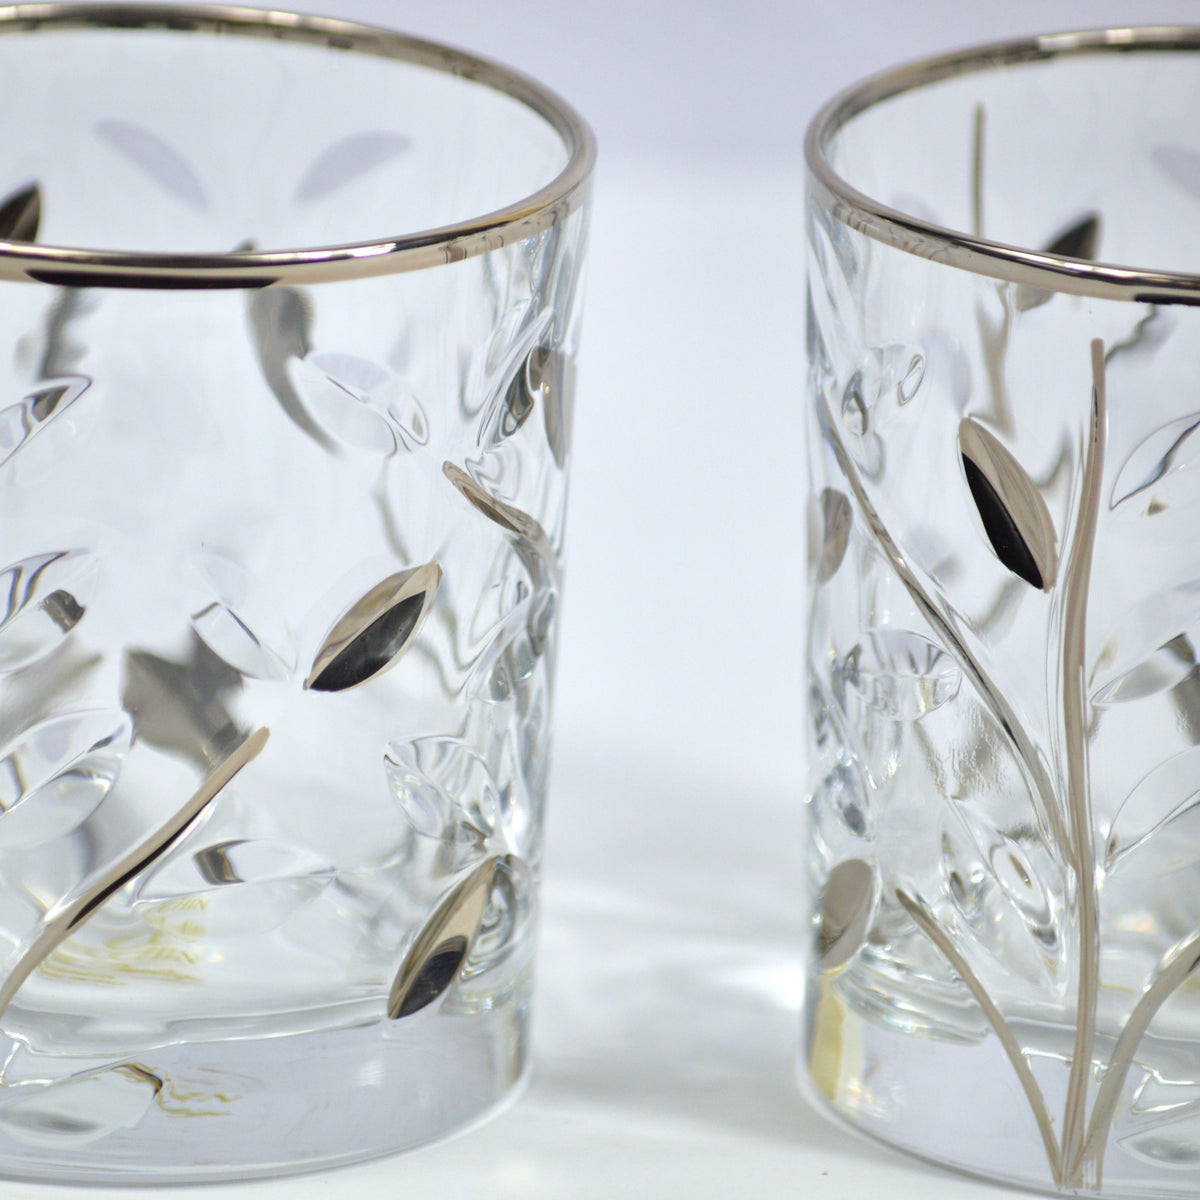 Flowervine Short Drink Glasses, Italian Crystal with Platinum, Set of 2 - My Italian Decor